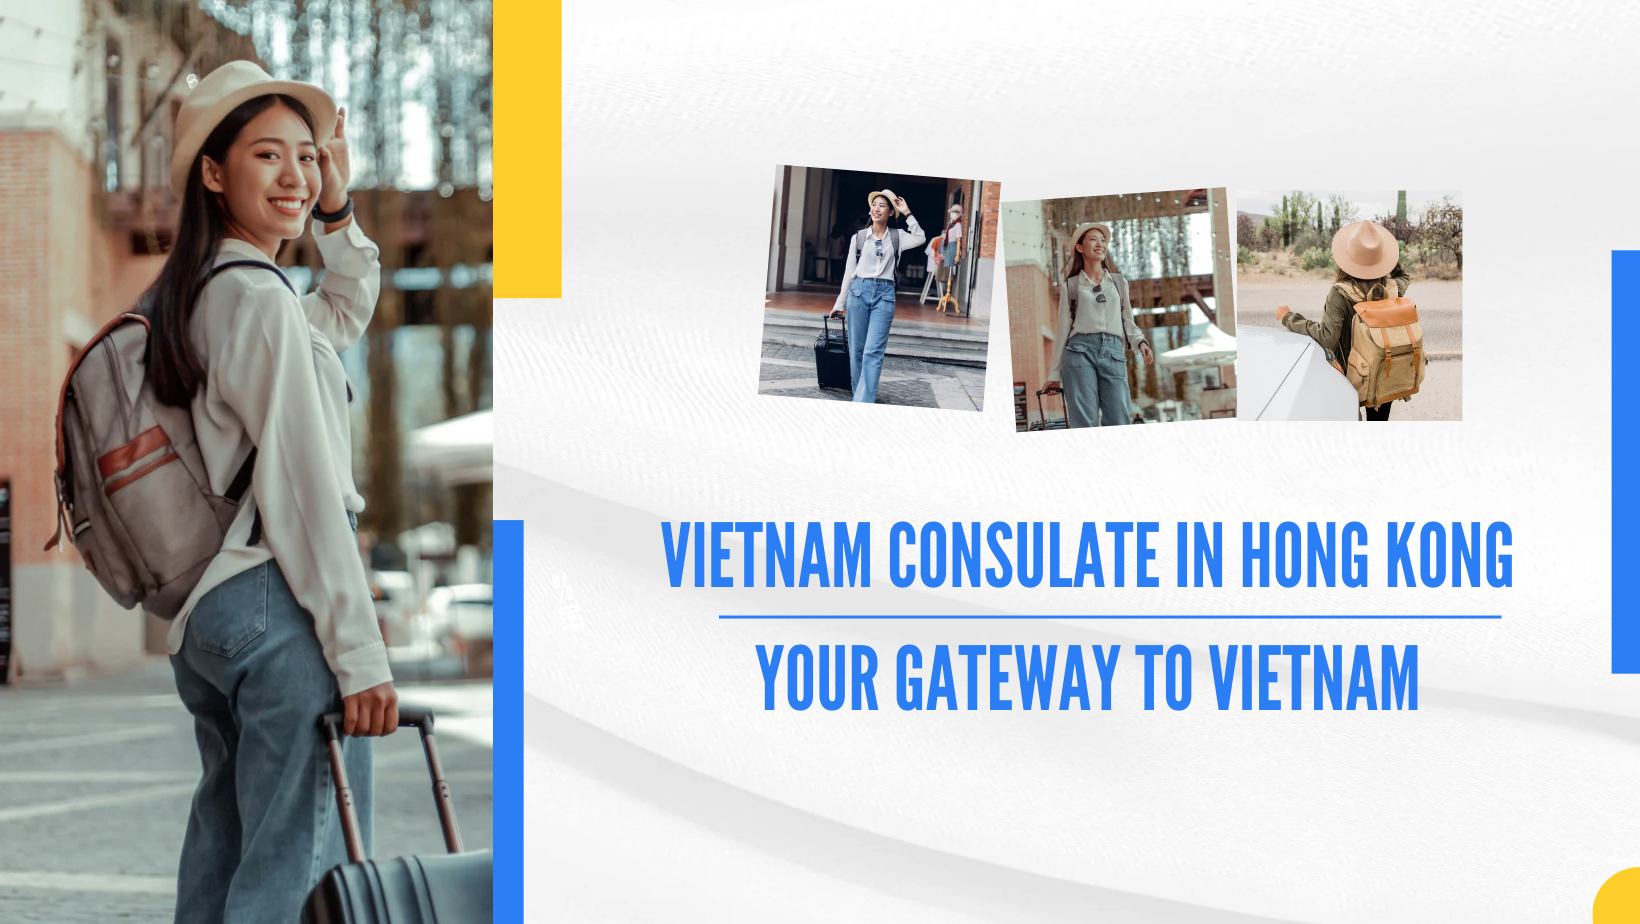 Vietnam Consulate in Hong Kong: Your gateway to Vietnam